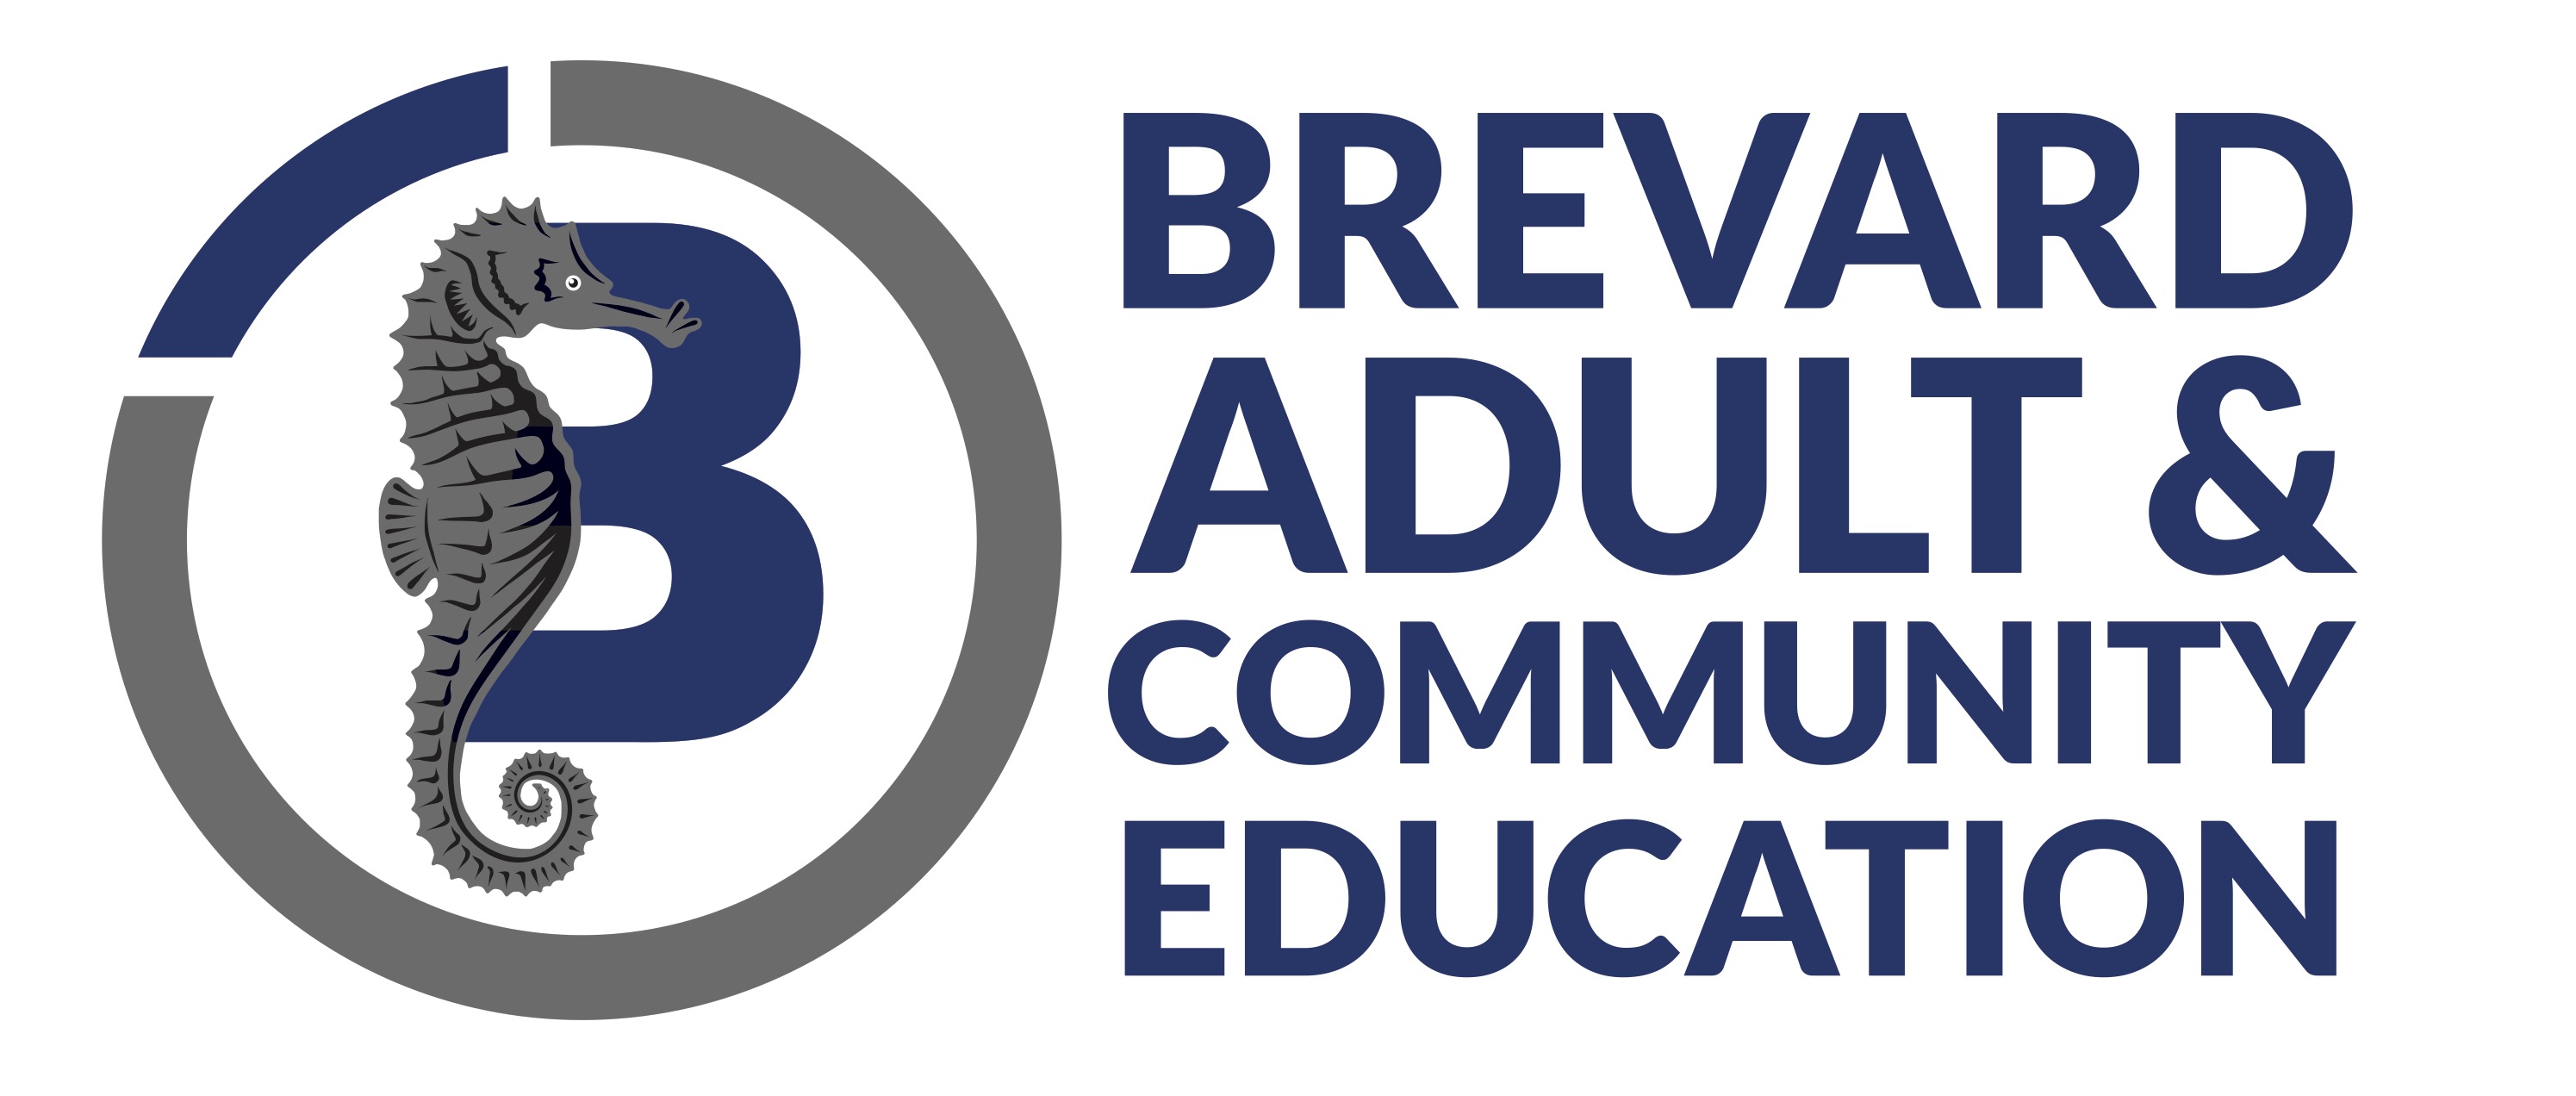 Brevard Schools Adult & Community Education